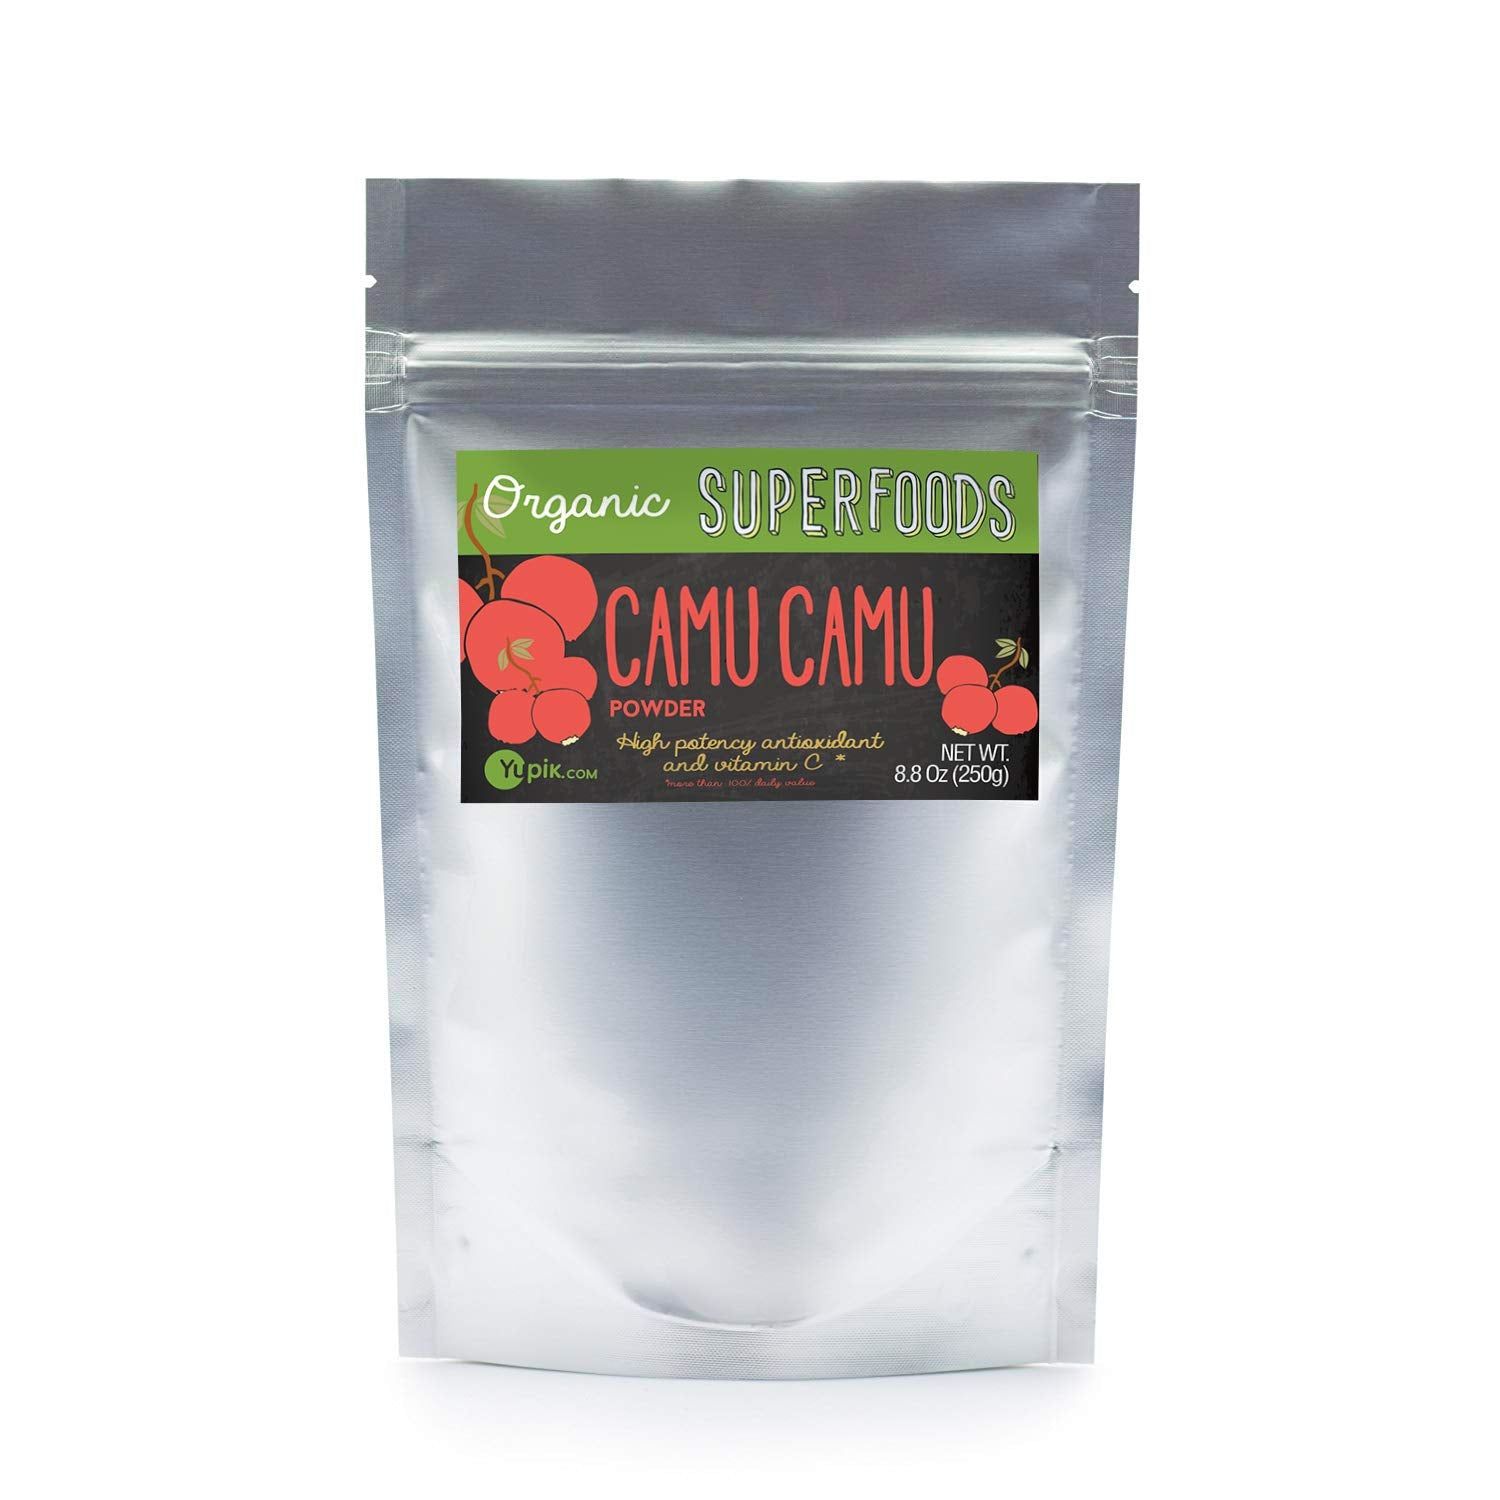 Yupik Organic Powder, Camu Camu, 8.8 oz, Non-GMO, Vegan, Gluten-Free, Pack of 1